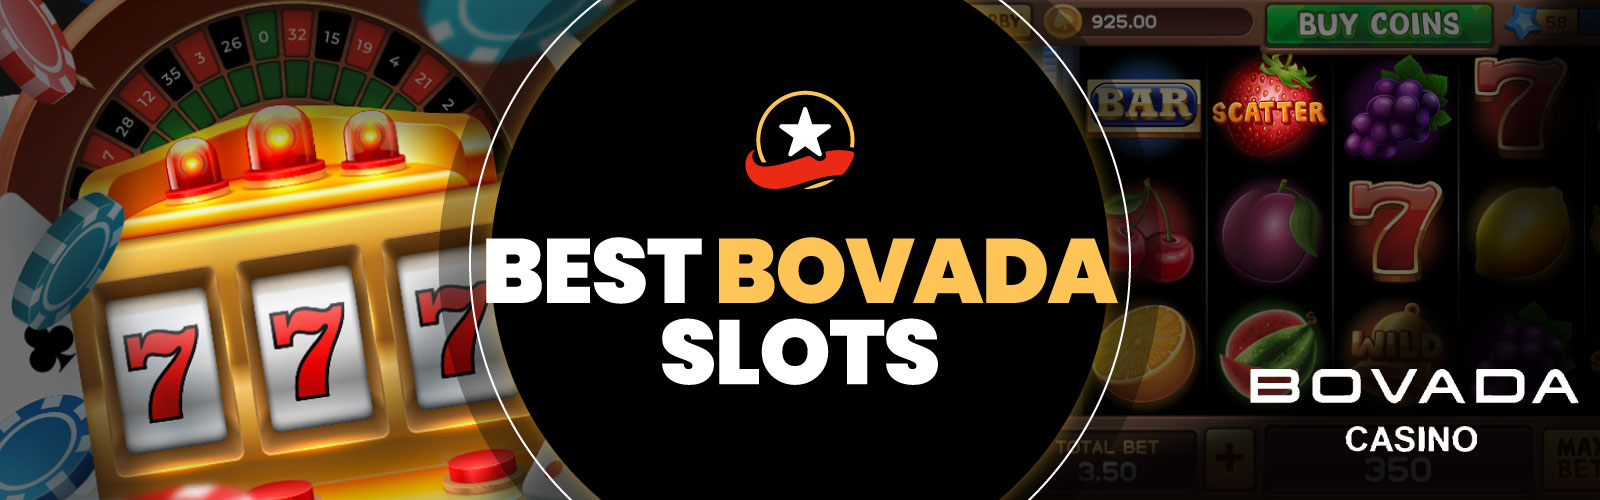 best bovada casino game reddit